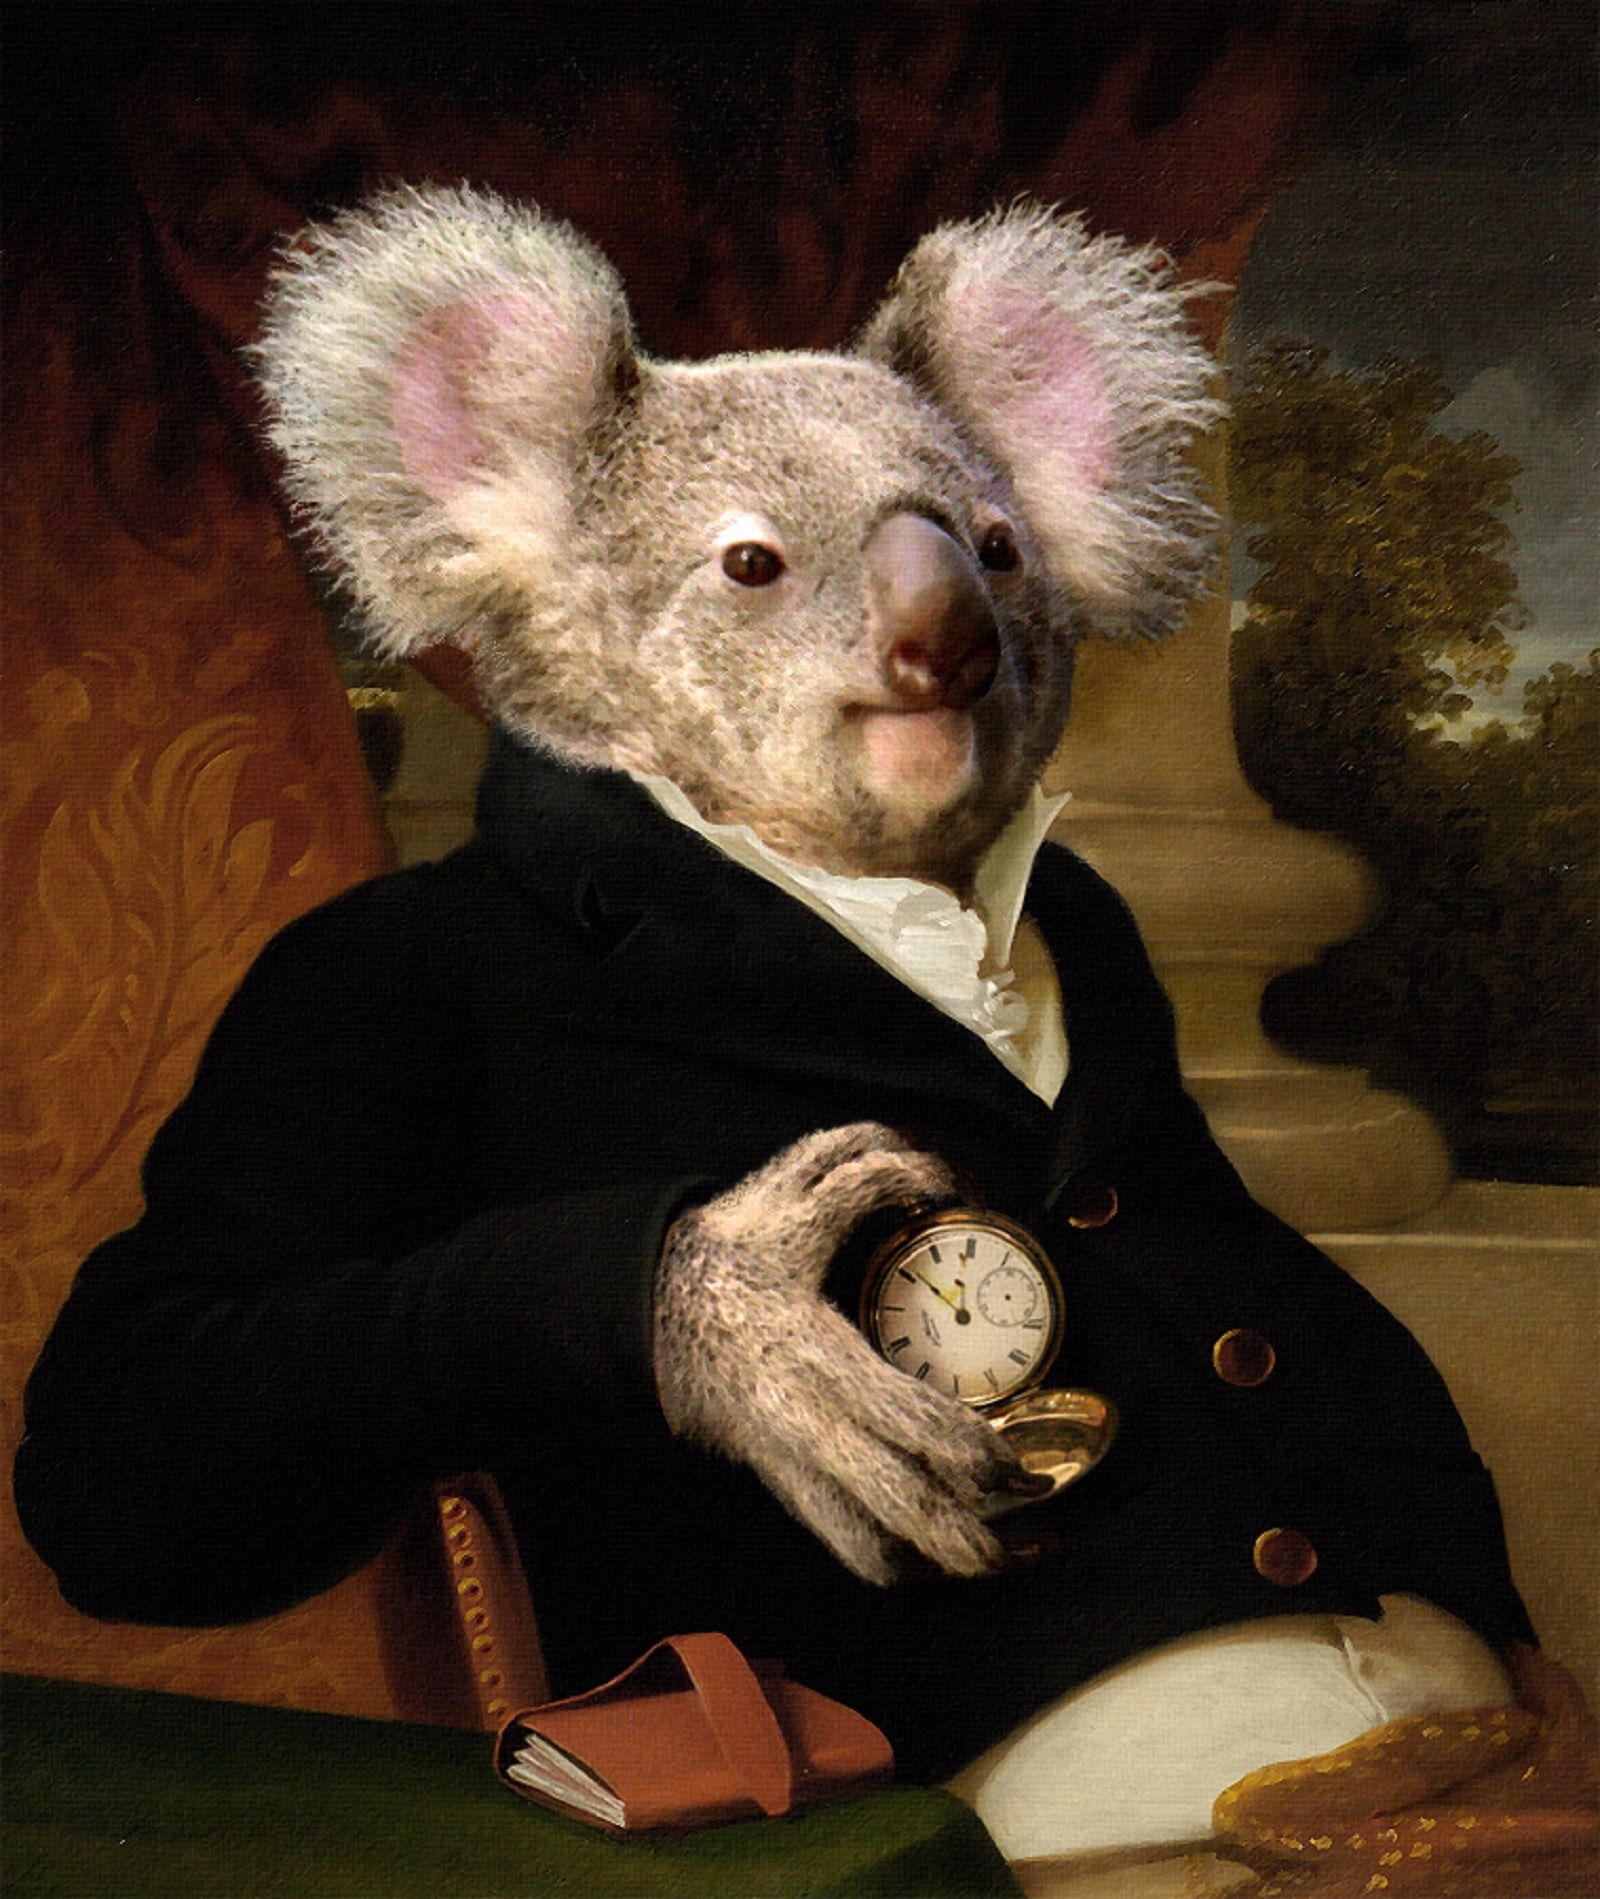 25 amusing images of animals Photoshopped into Renaissance paintings image 1